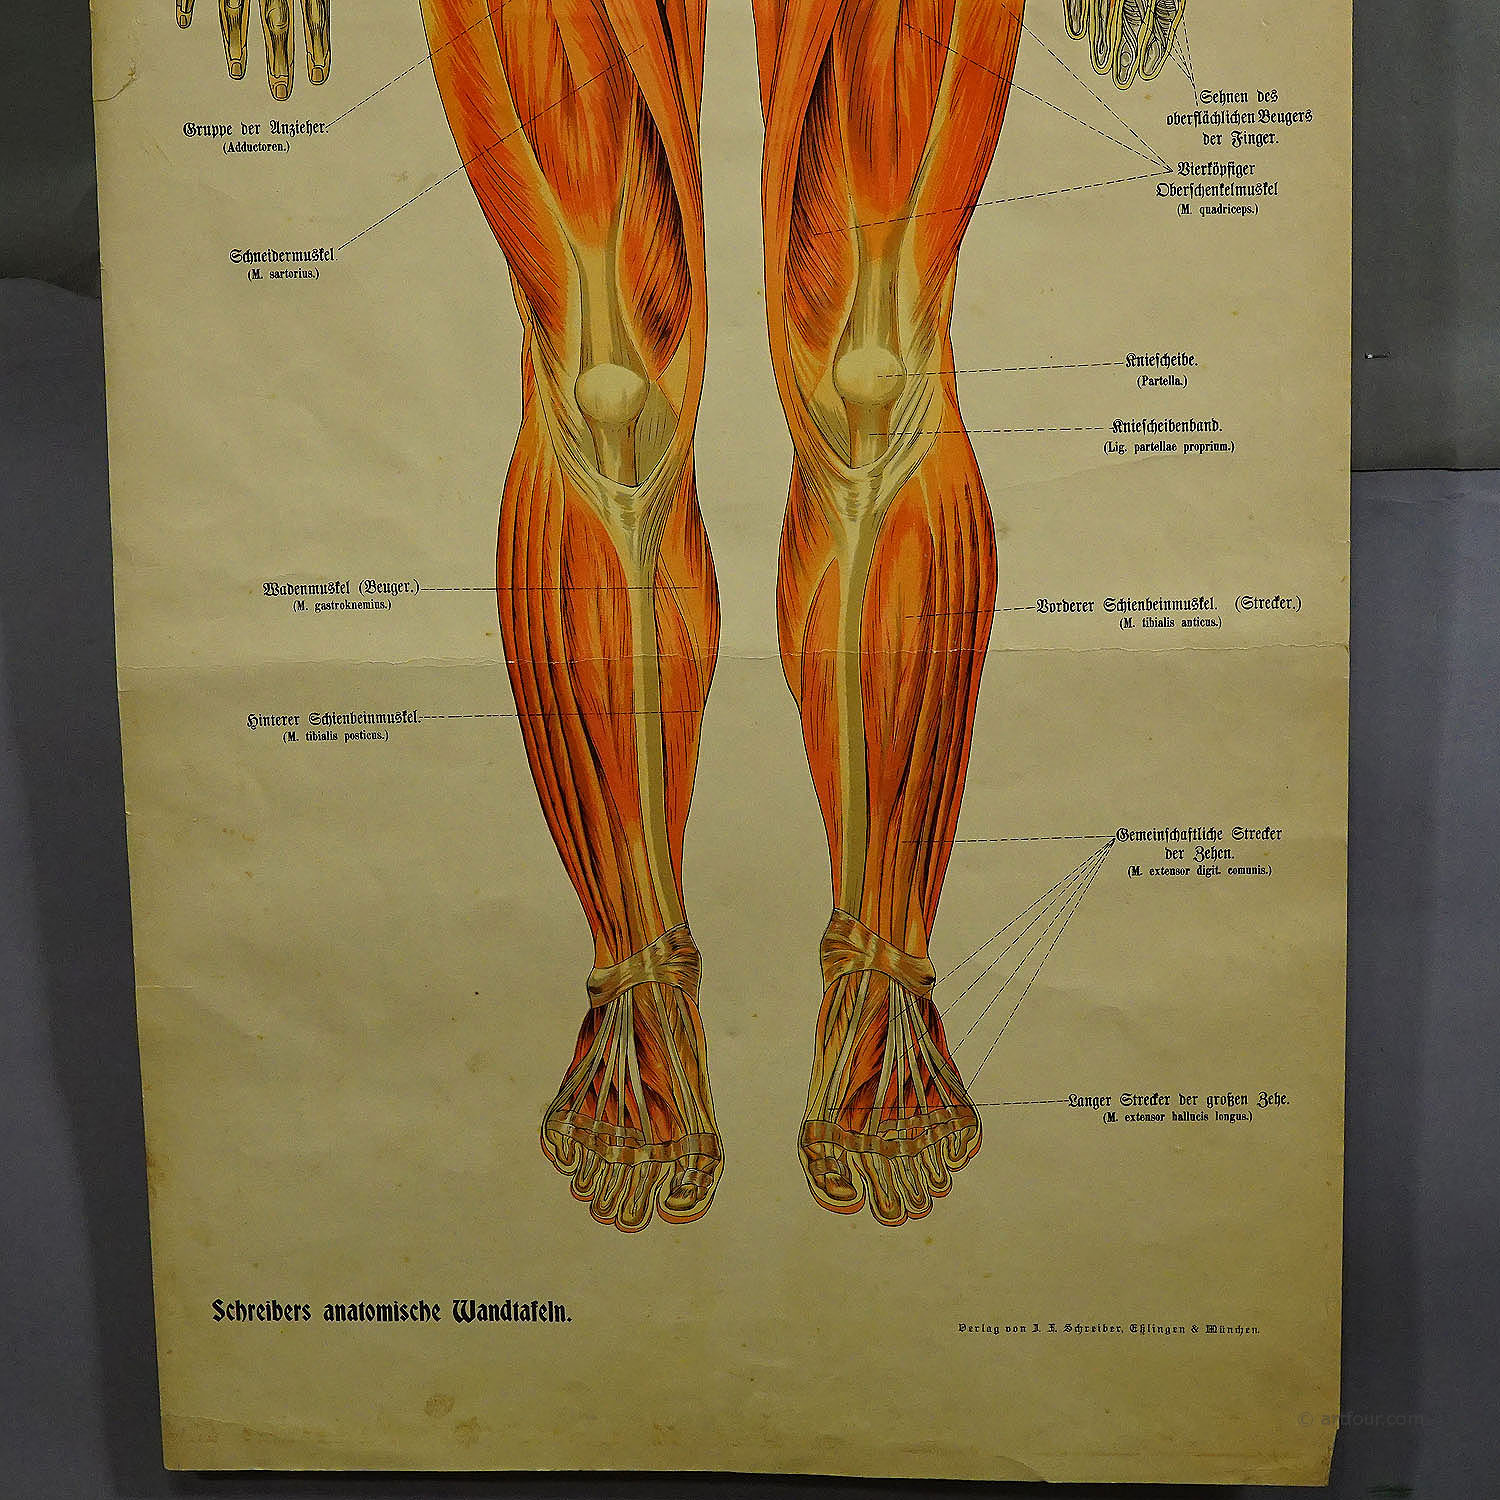 Foldable Anatomical Wall Chart depicting Human Musculature